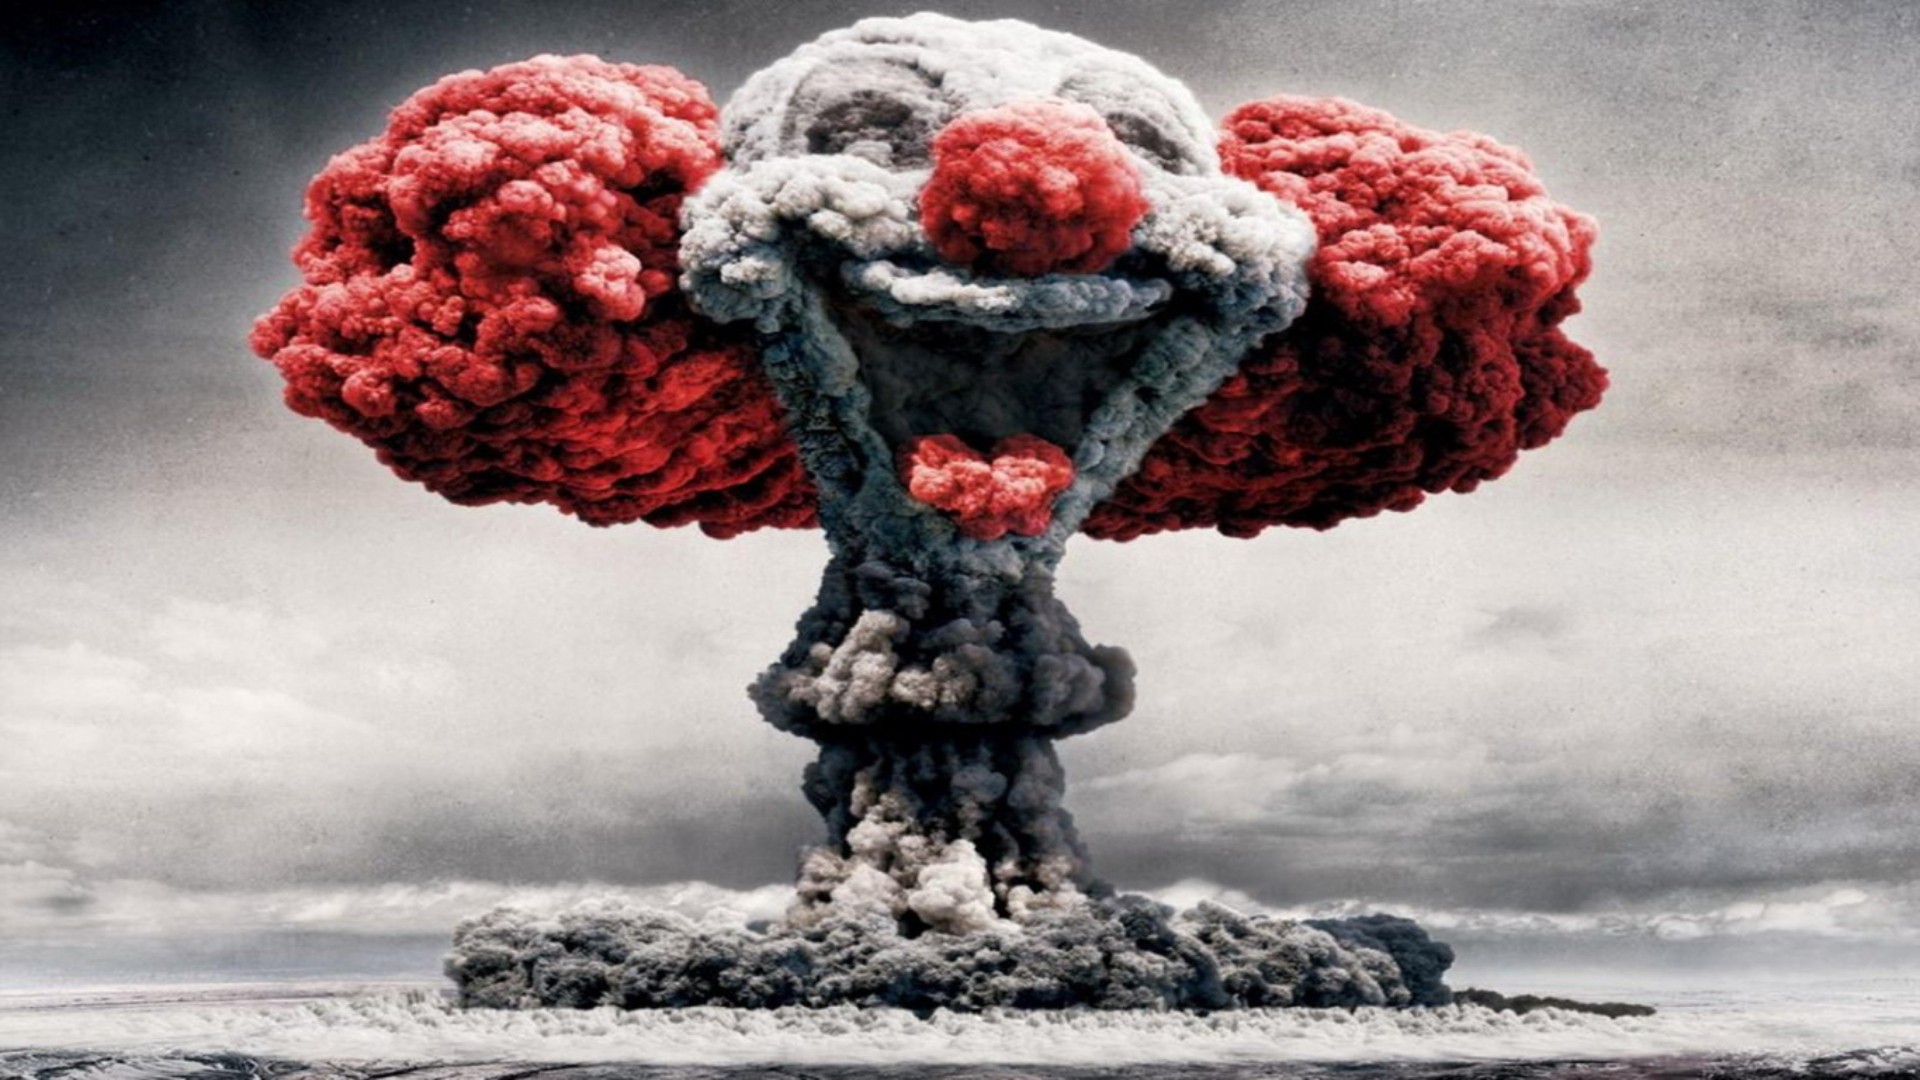 General 1920x1080 clown clouds bombs atomic bomb mushroom clouds digital art dark humor explosion